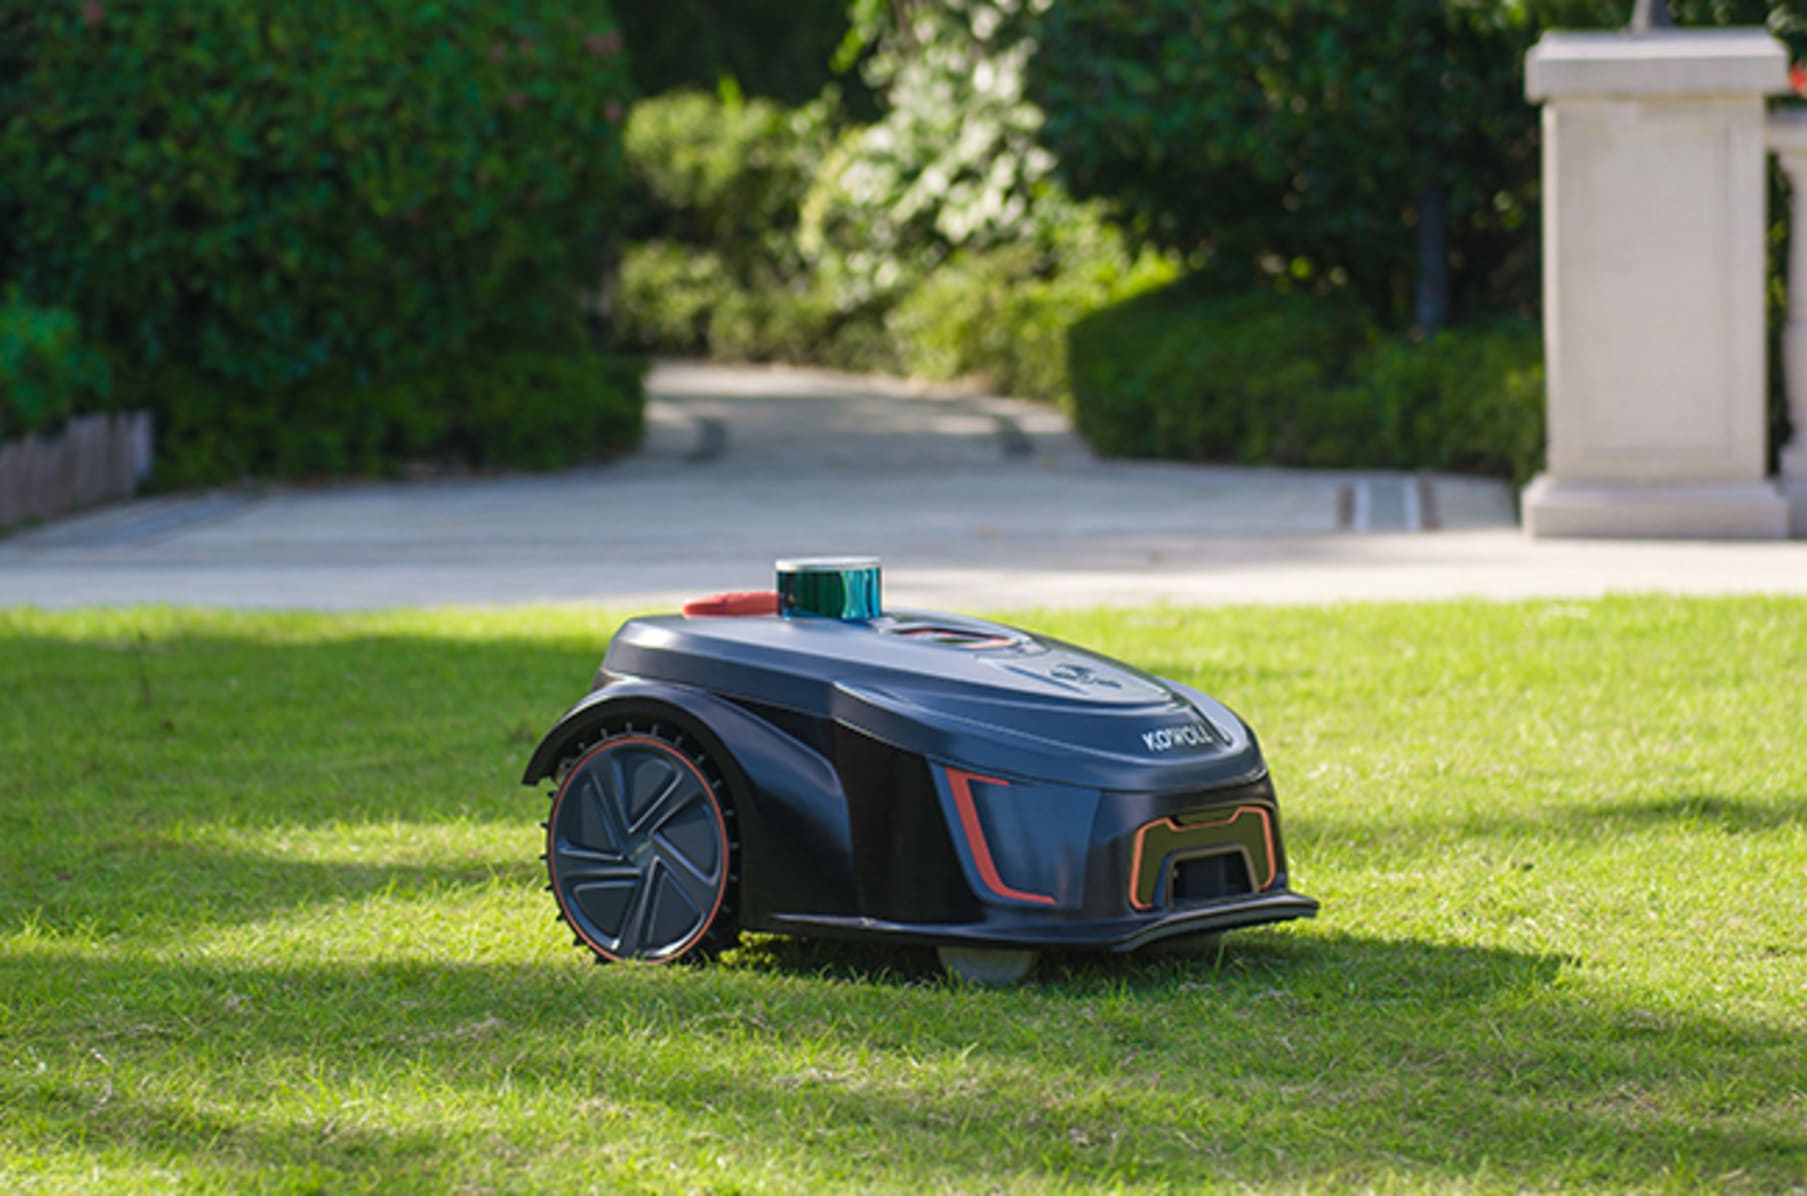 KOWOLL M28E: 3D LiDAR SLAM & RTK Robot Lawn Mower | Indiegogo